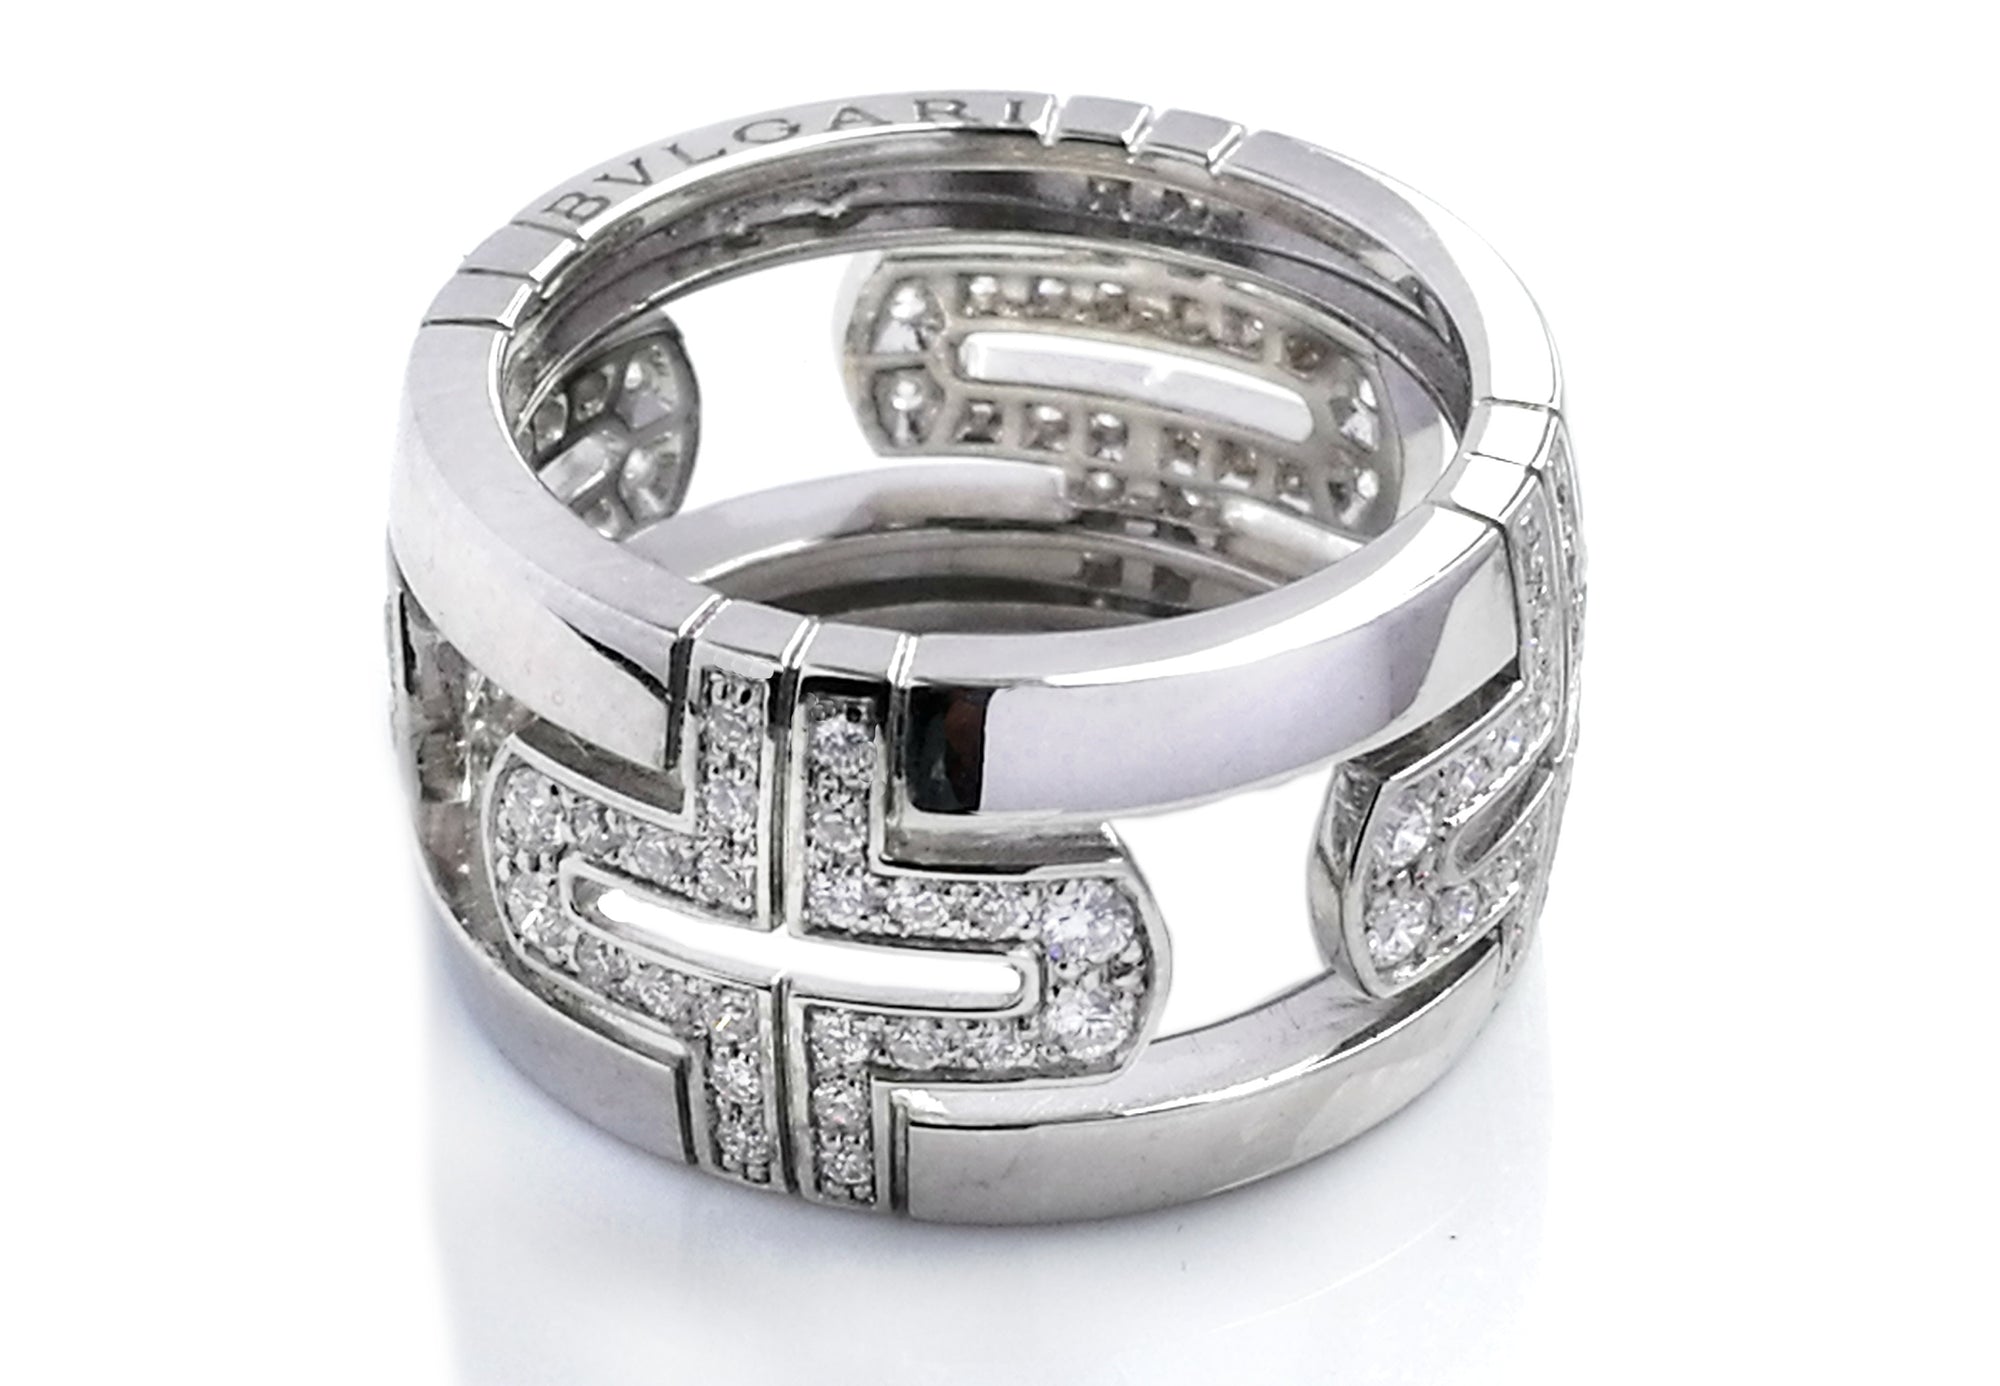 Bulgari Parentesi Pavé Diamond Ring in 18k White Gold, Size 53